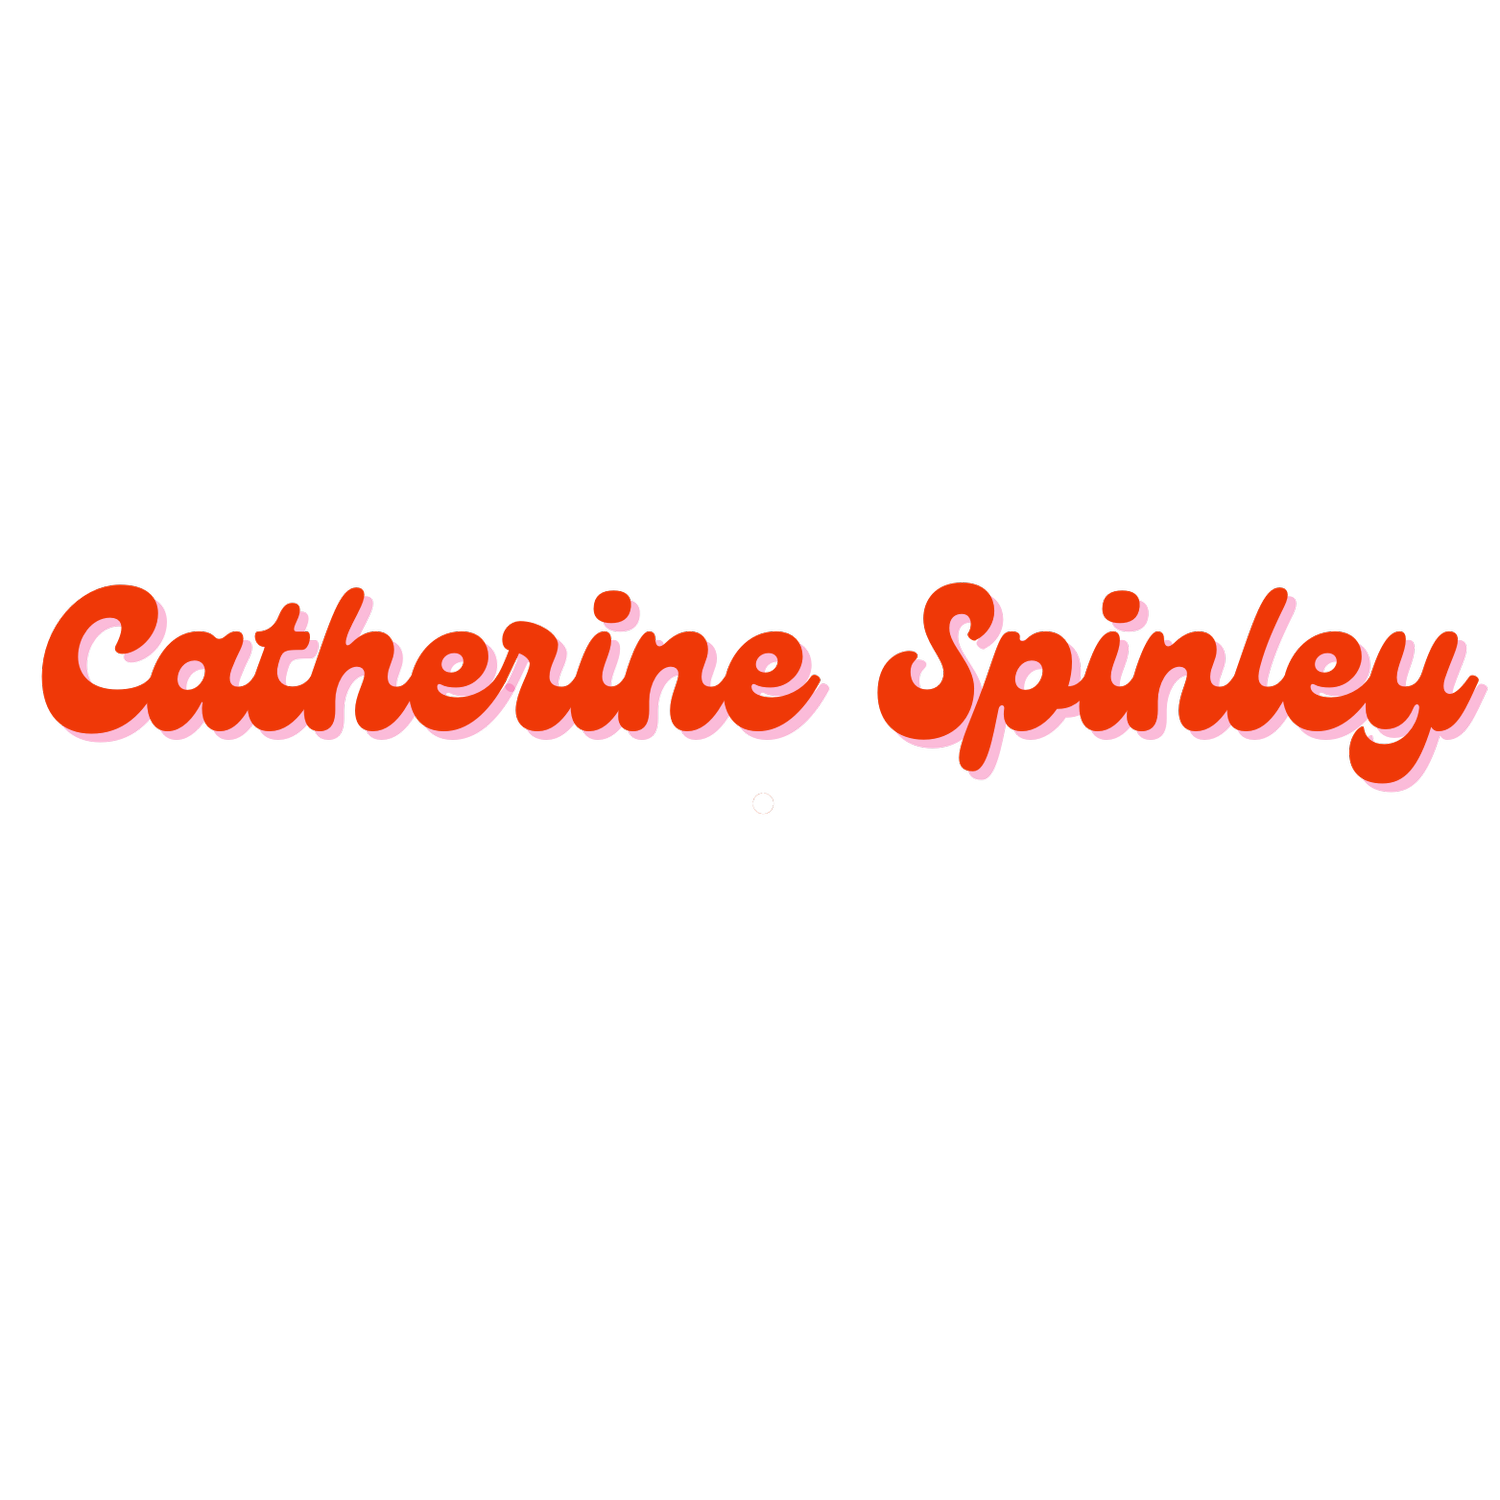 CATHERINE SPINLEY